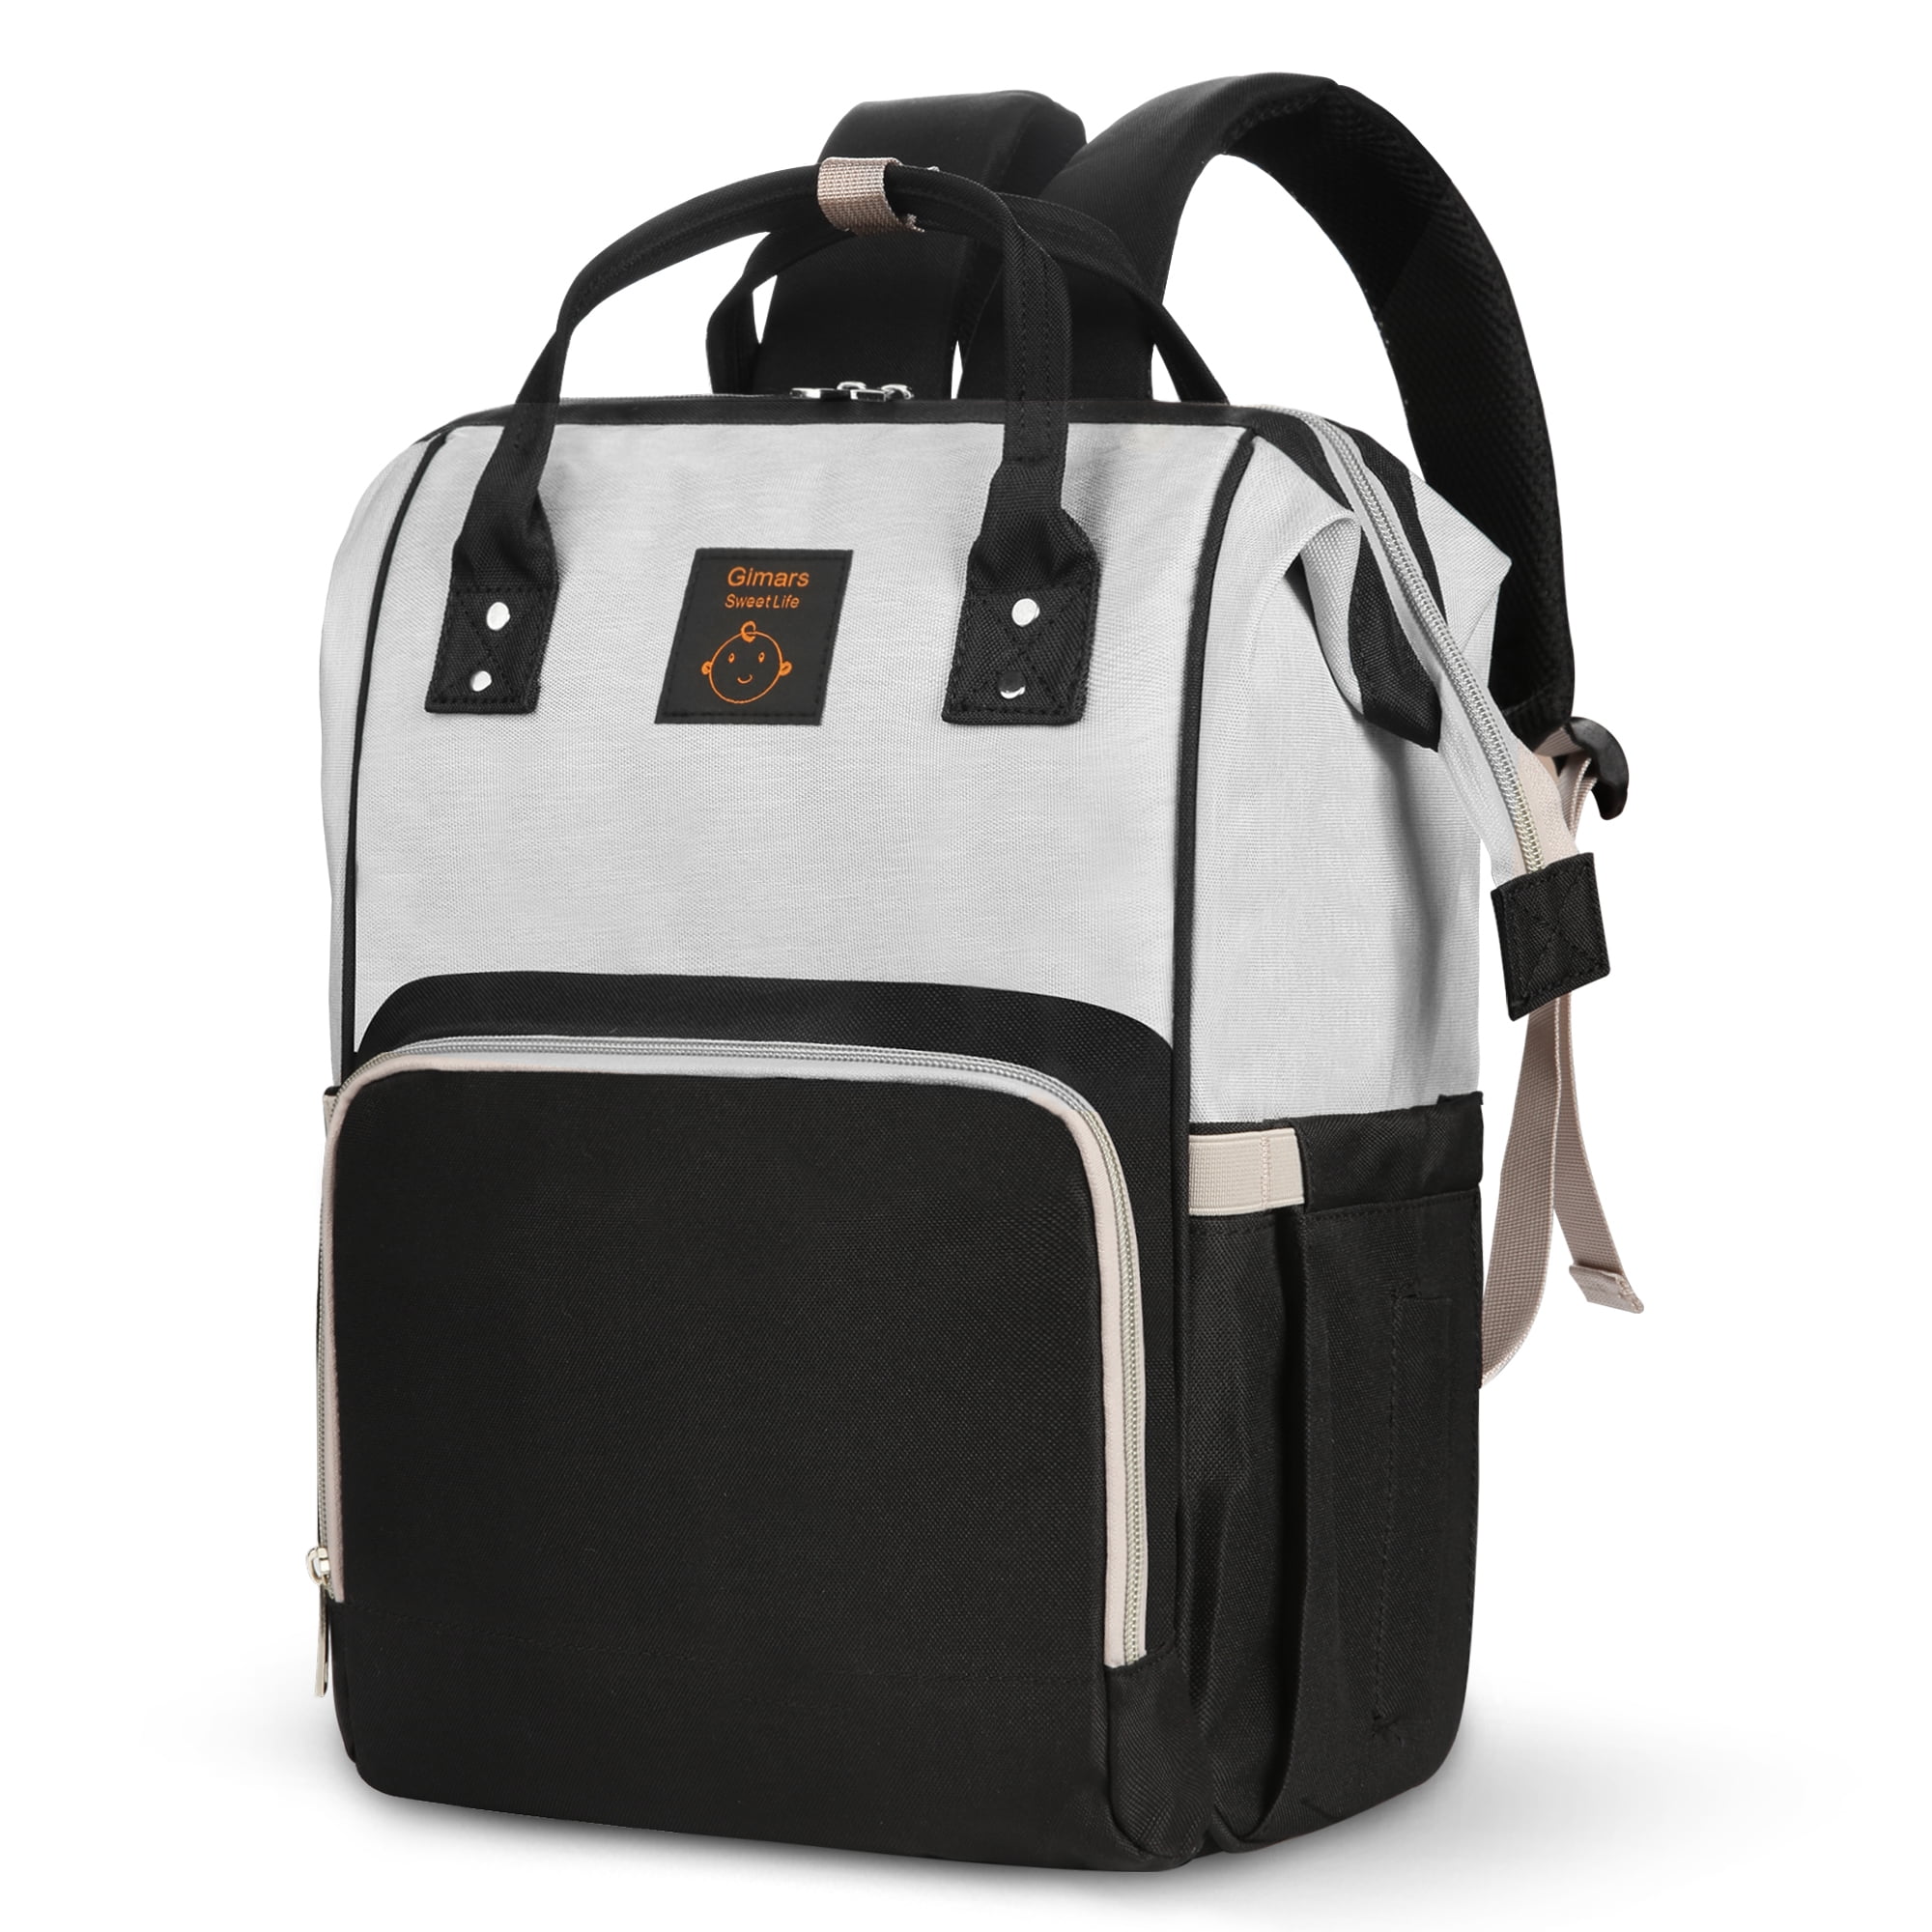 Gimars Insulated Pockets Waterproof Adjustable Shoulder Straps Backpack Diaper Bags, Multi-color